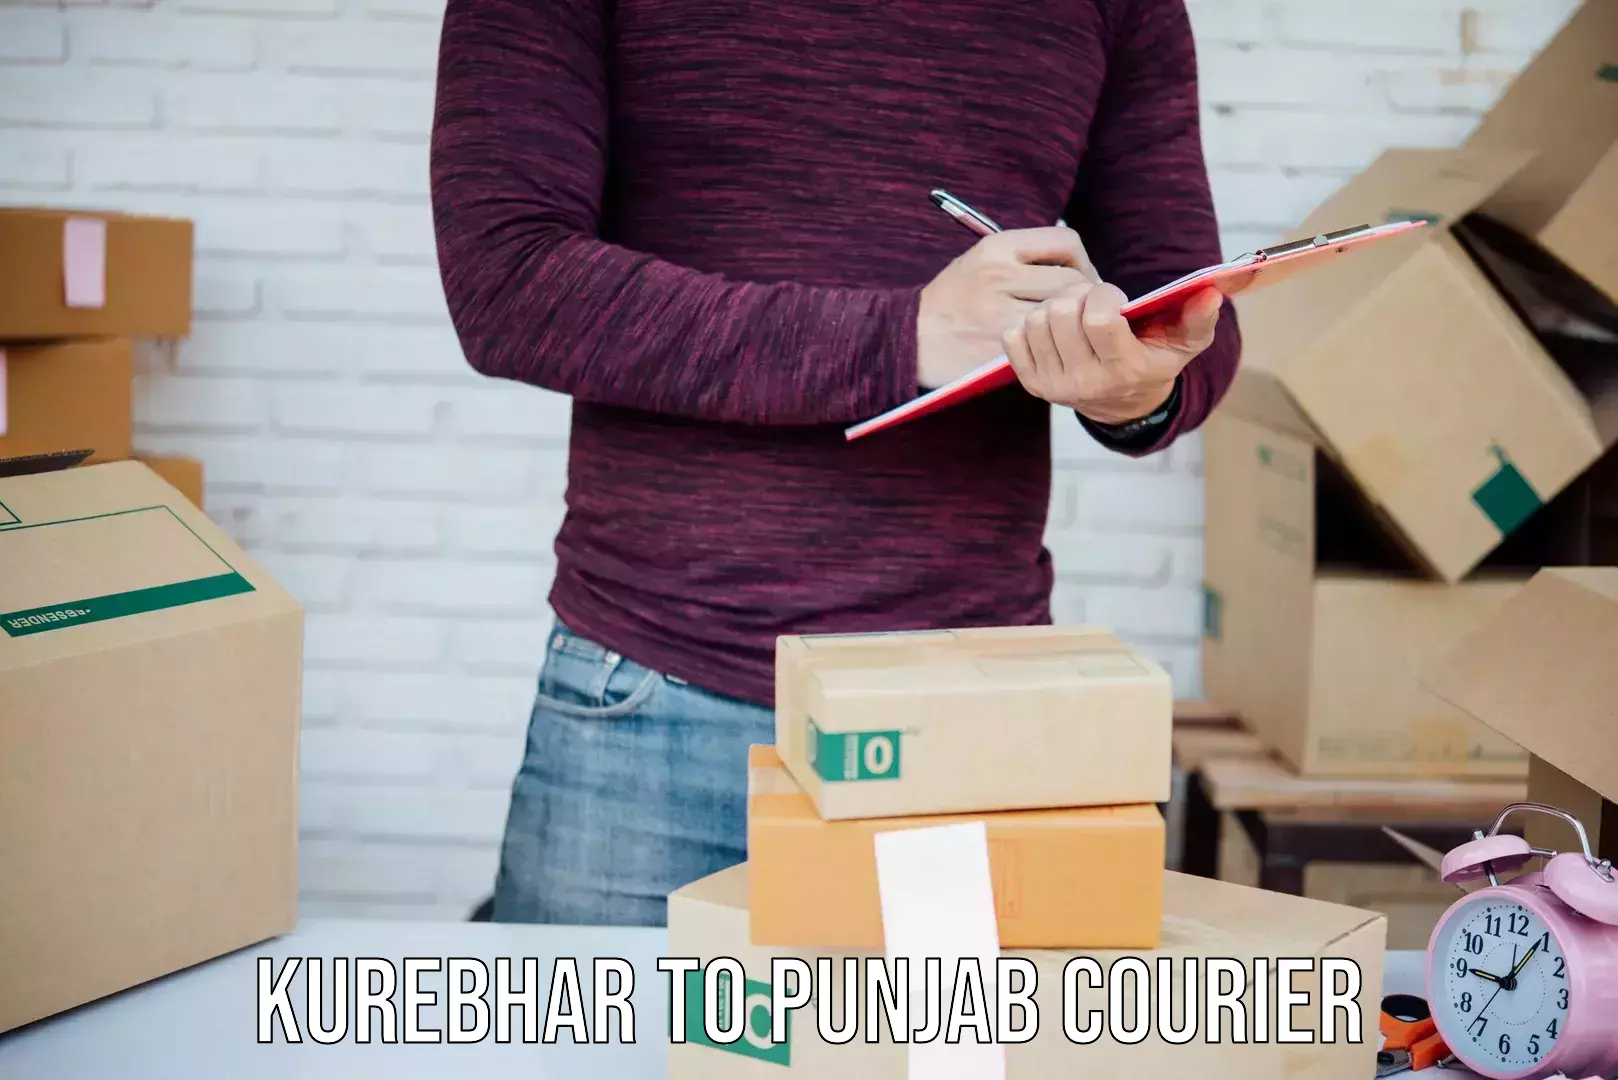 Efficient order fulfillment Kurebhar to Punjab